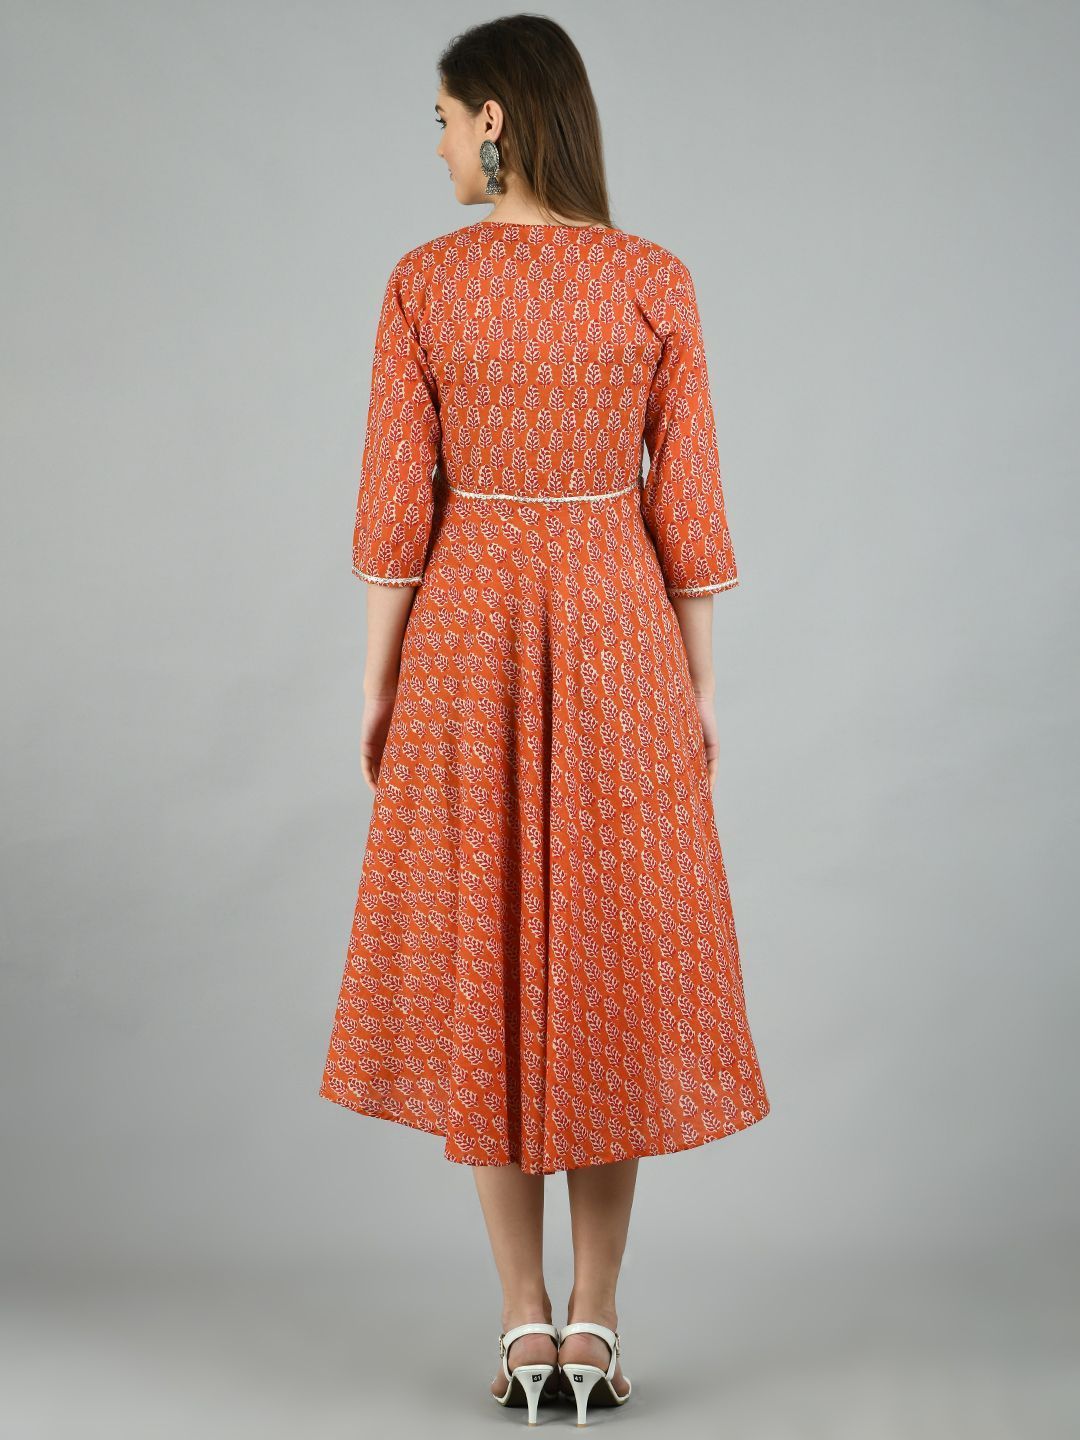 Women's Brown Cotton Printed 3/4 Sleeve Round Neck Casual Dress - Myshka